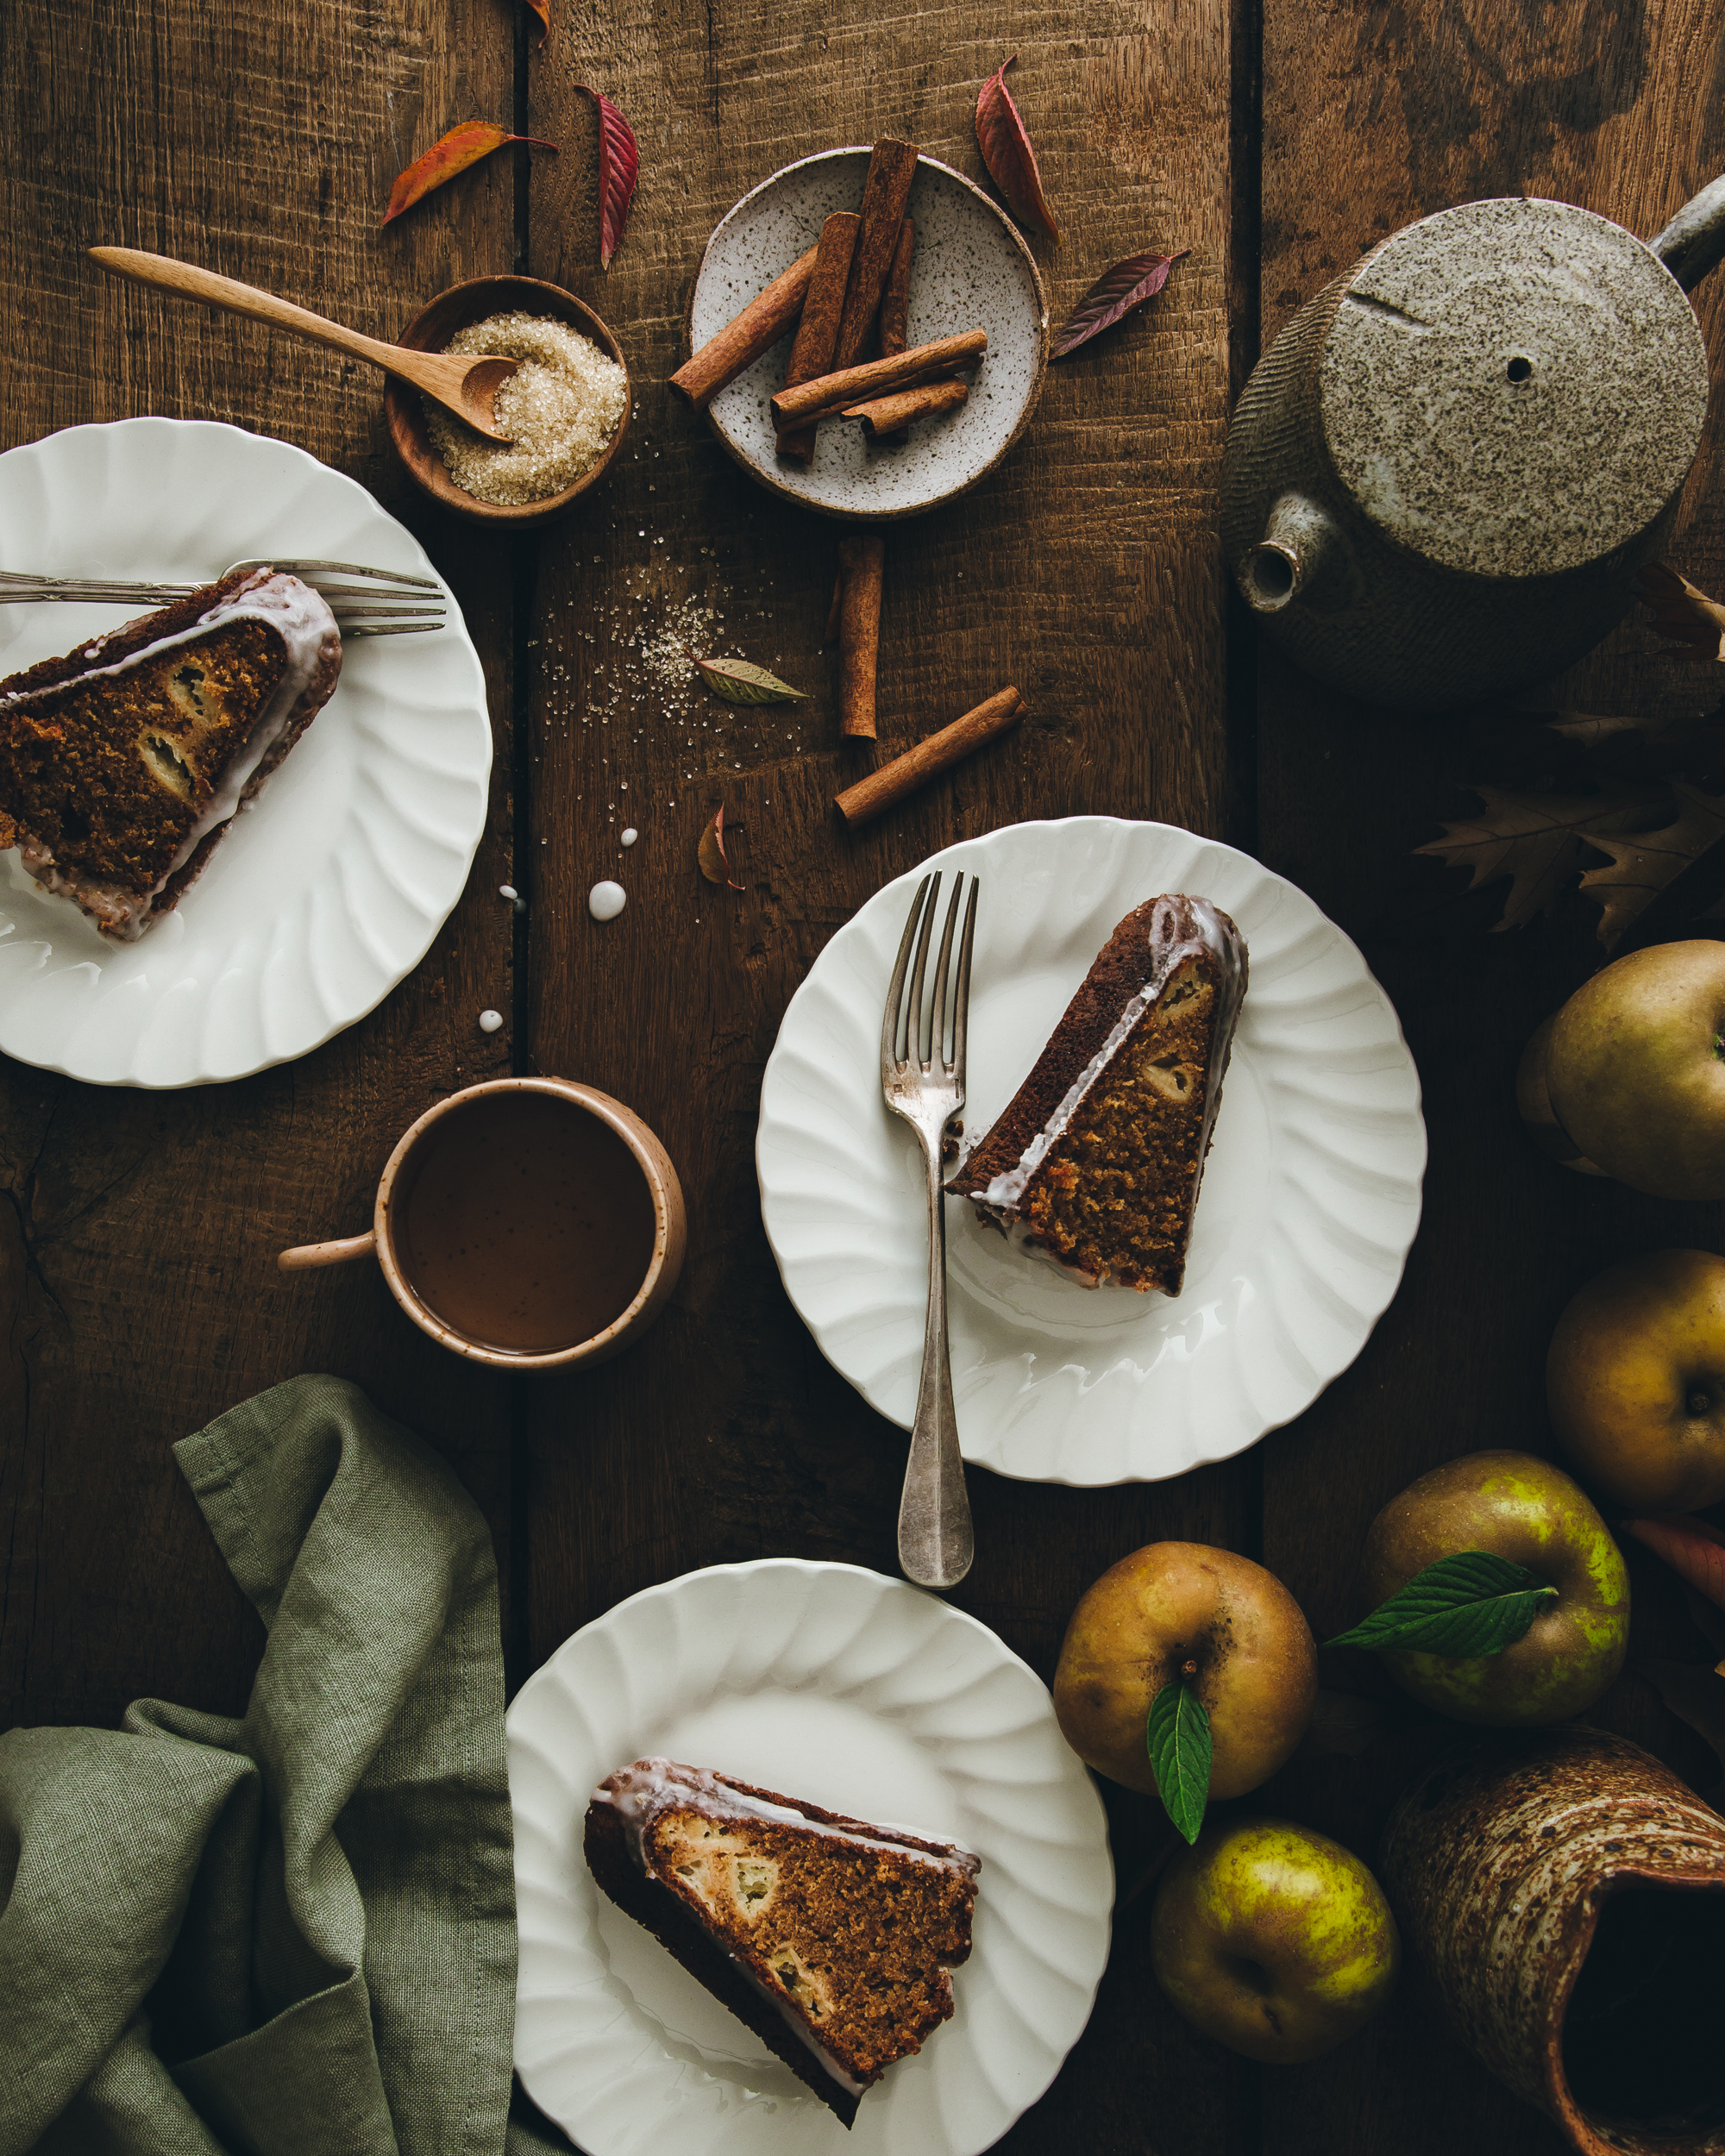 Apple and cinnamon bundt cake